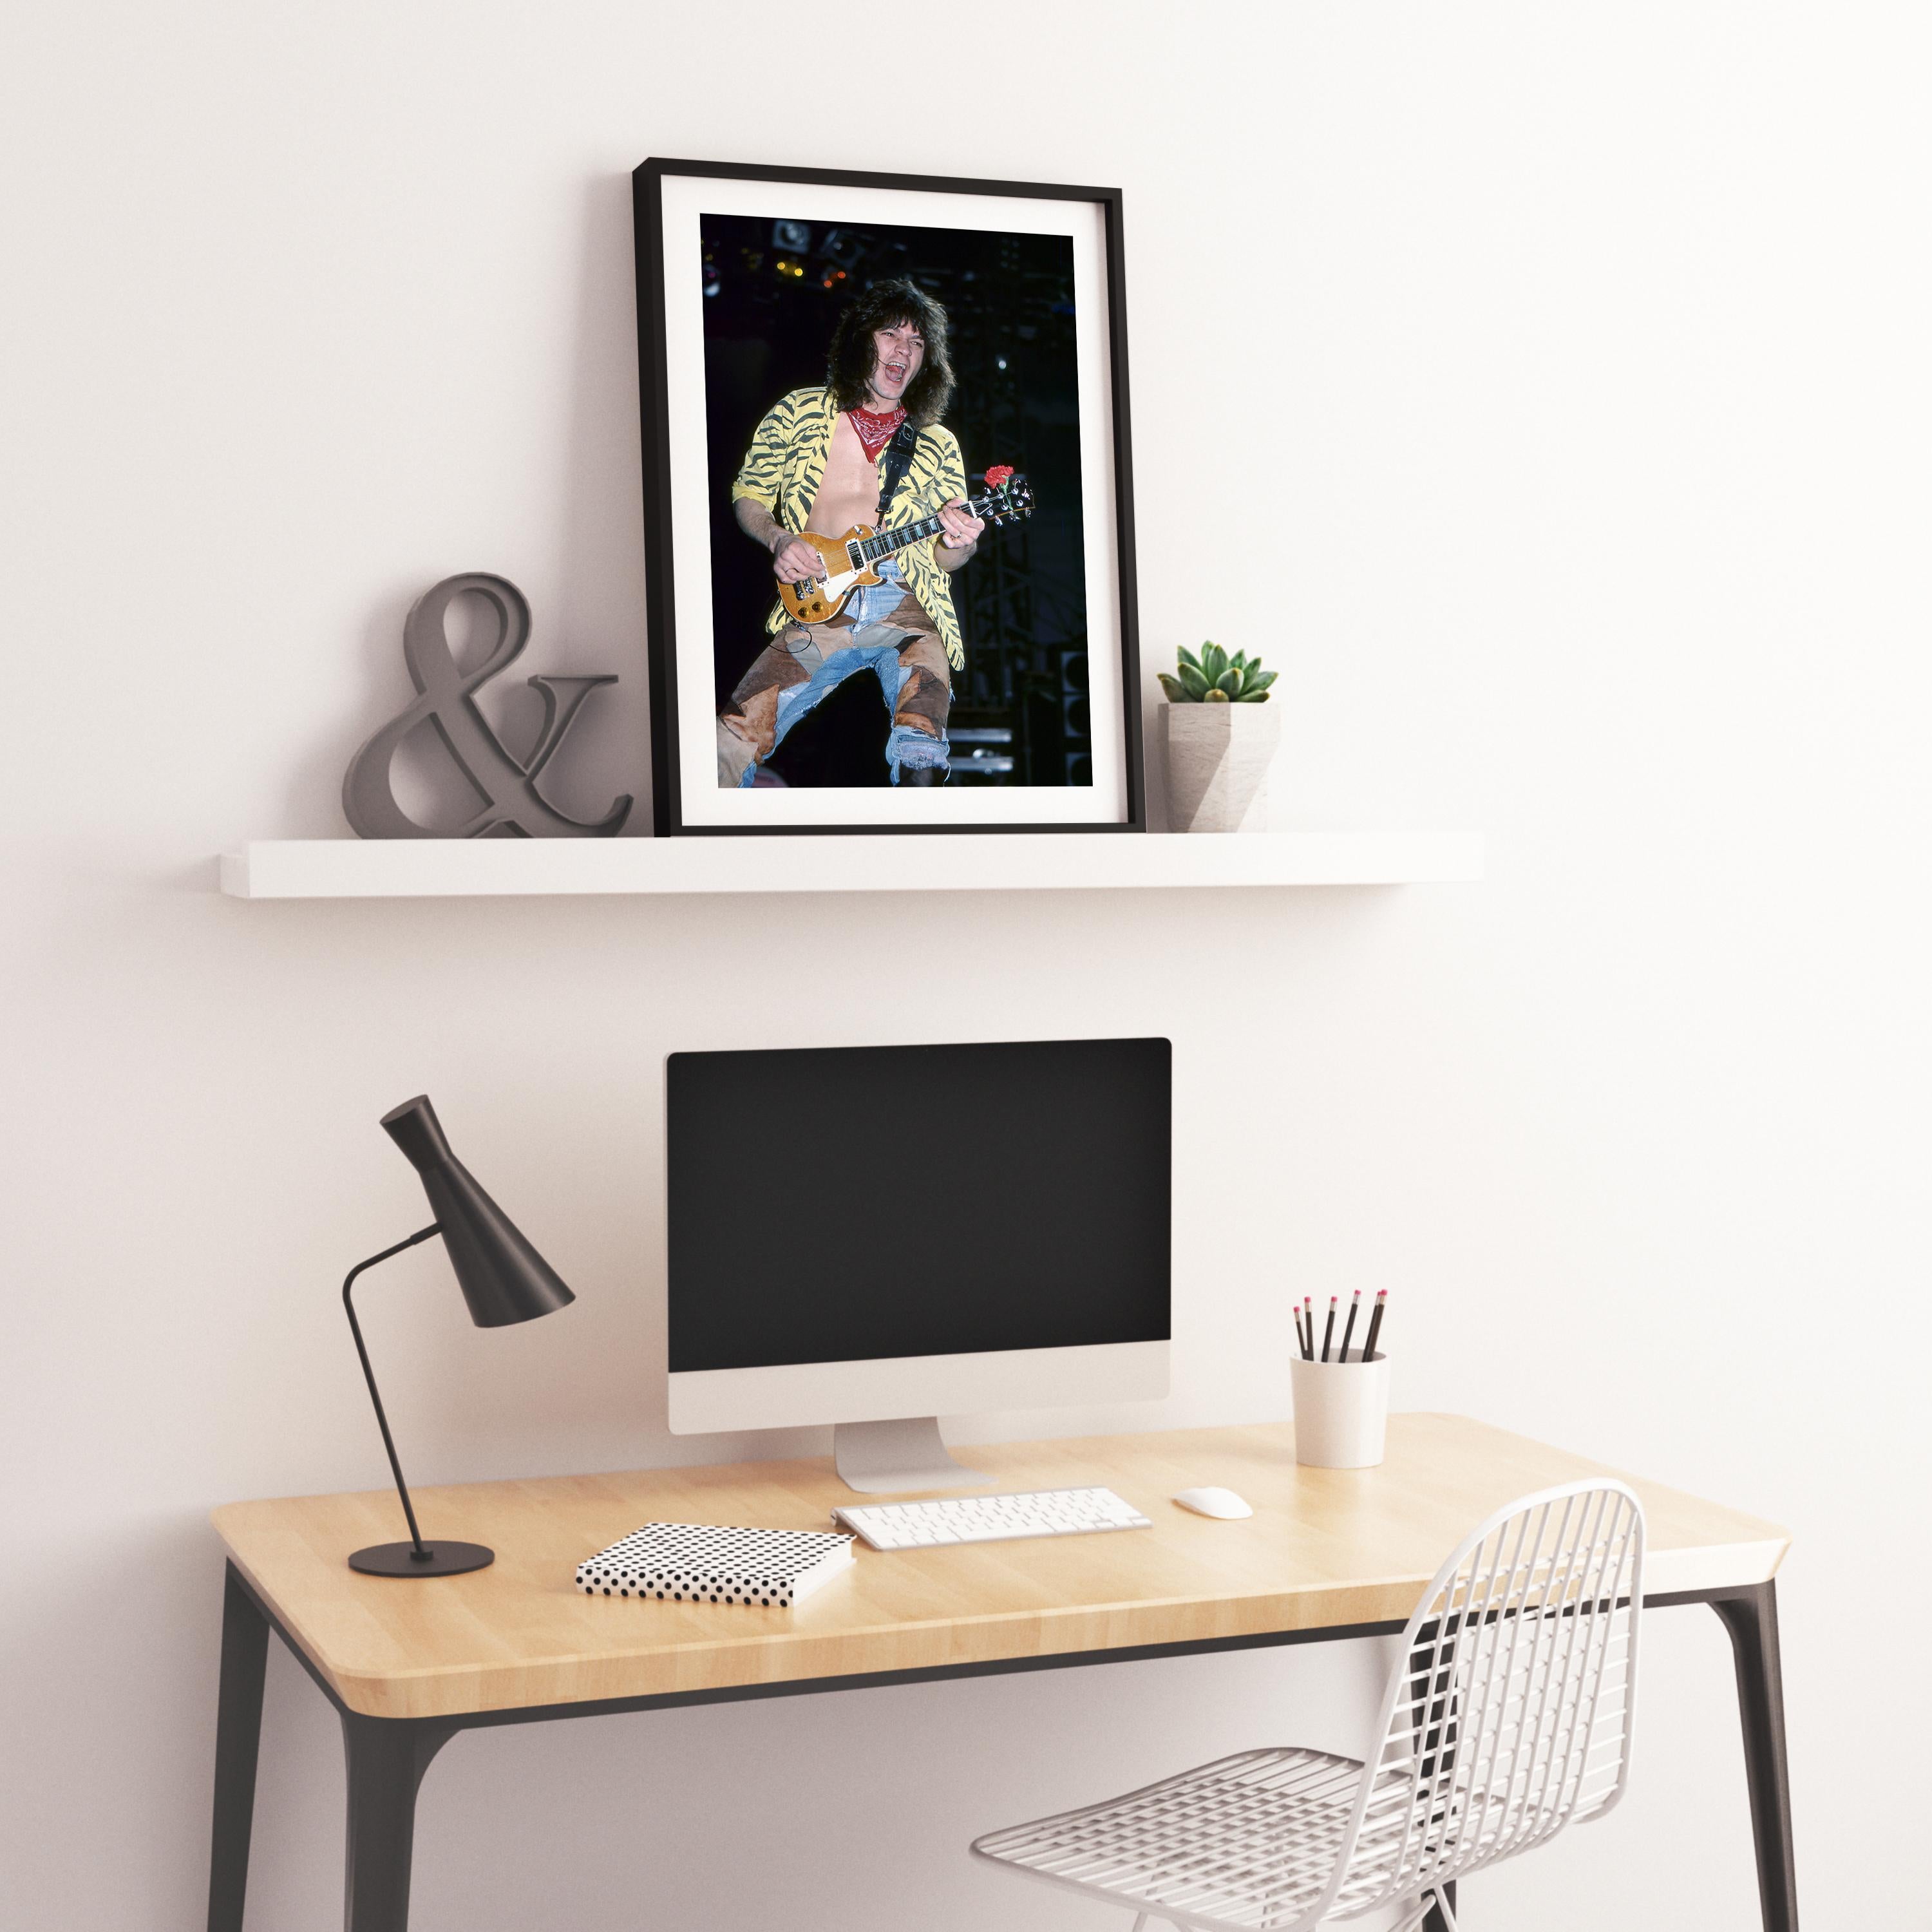 Eddie Van Halen in Yellow Zebra Fine Art Print - Black Portrait Photograph by David Plastik